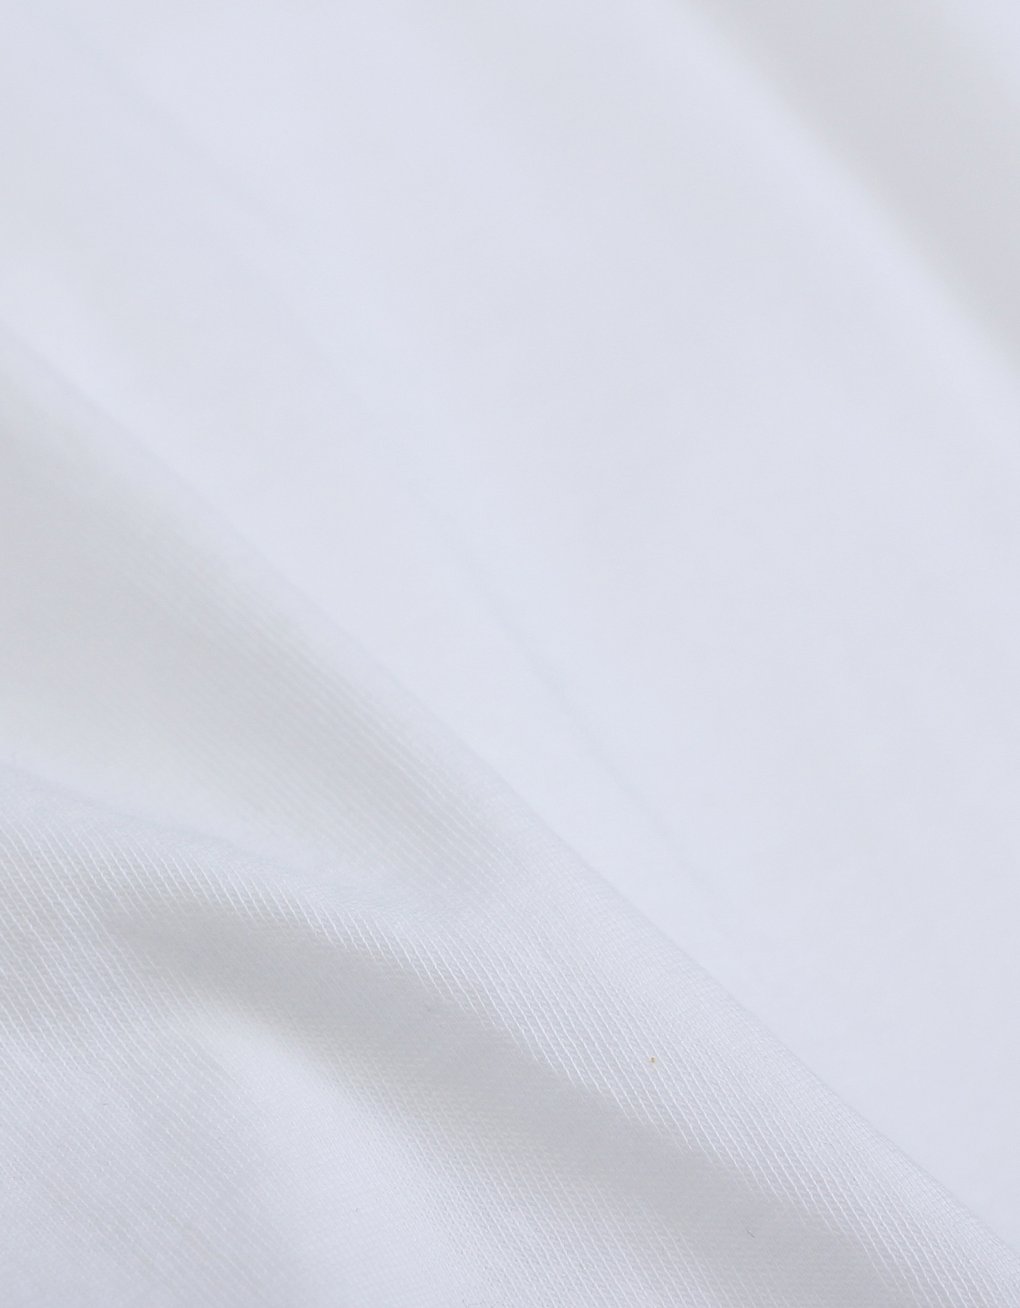 Camiseta Colorful Standard de Algodón Orgánico Blanca - ECRU